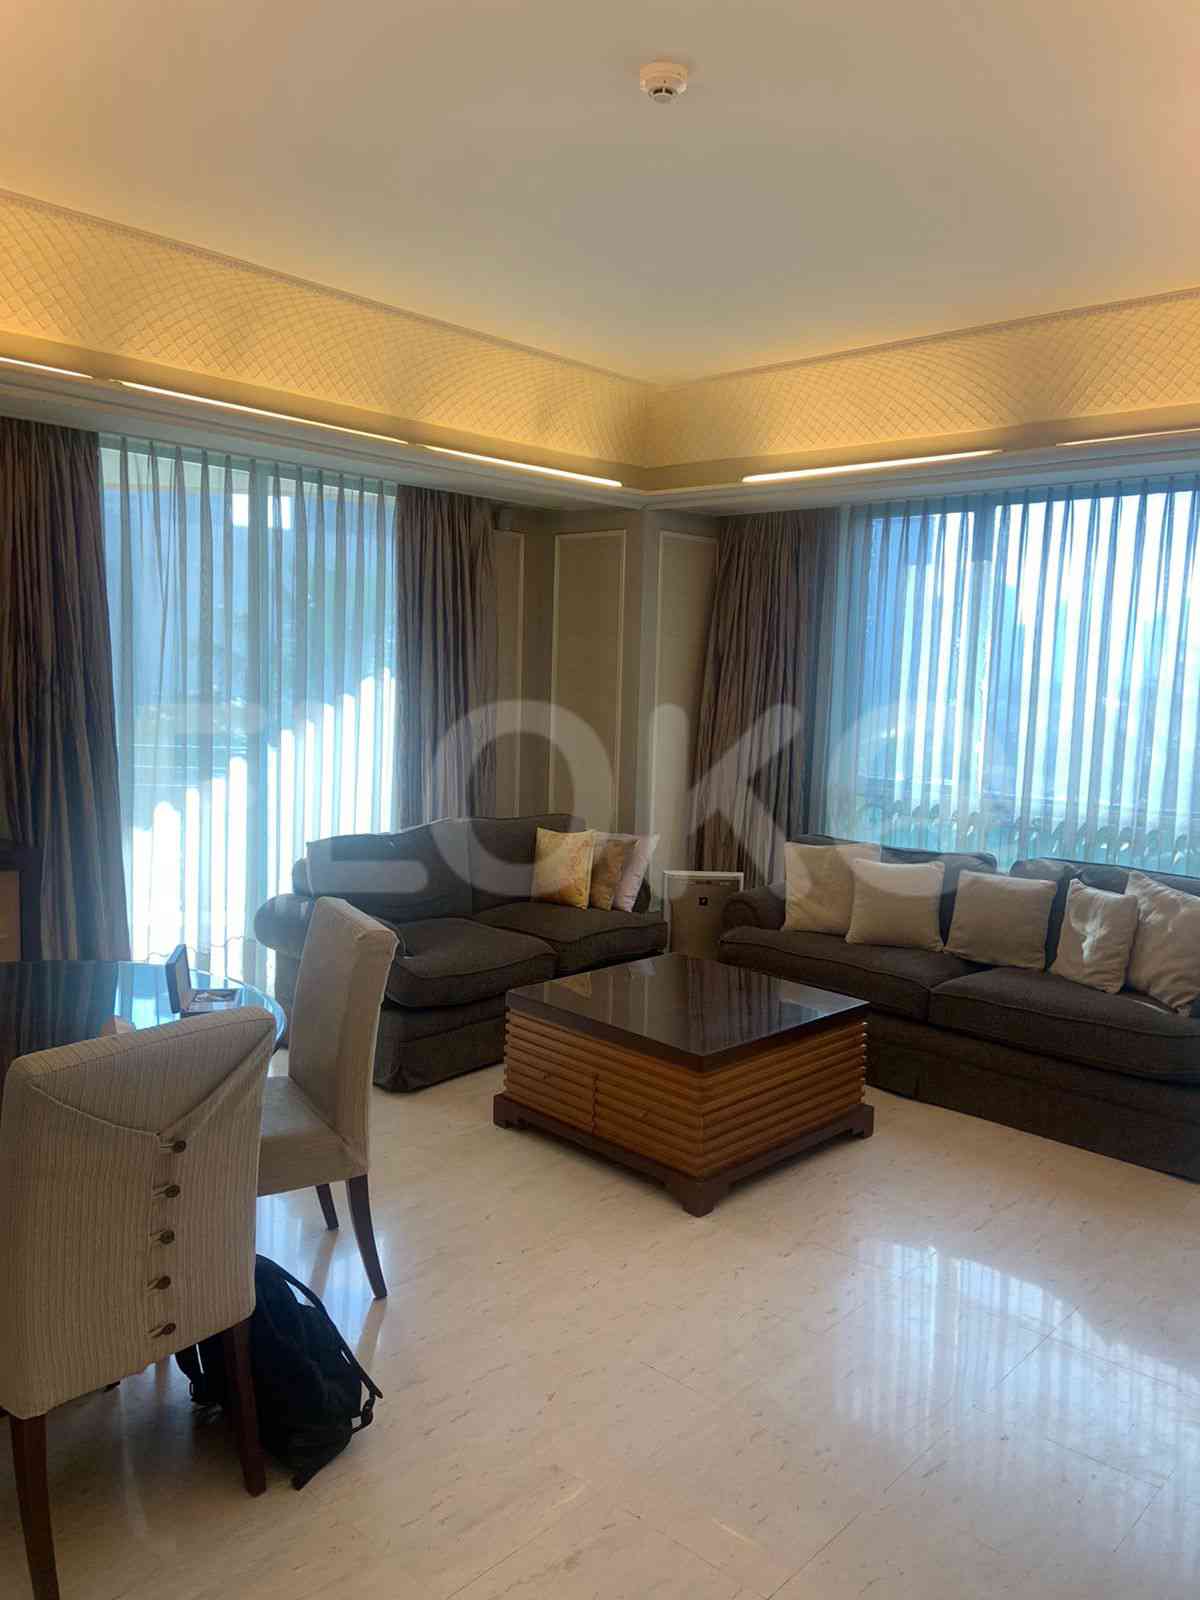 2 Bedroom on 5th Floor for Rent in Casablanca Apartment - fte5d5 2